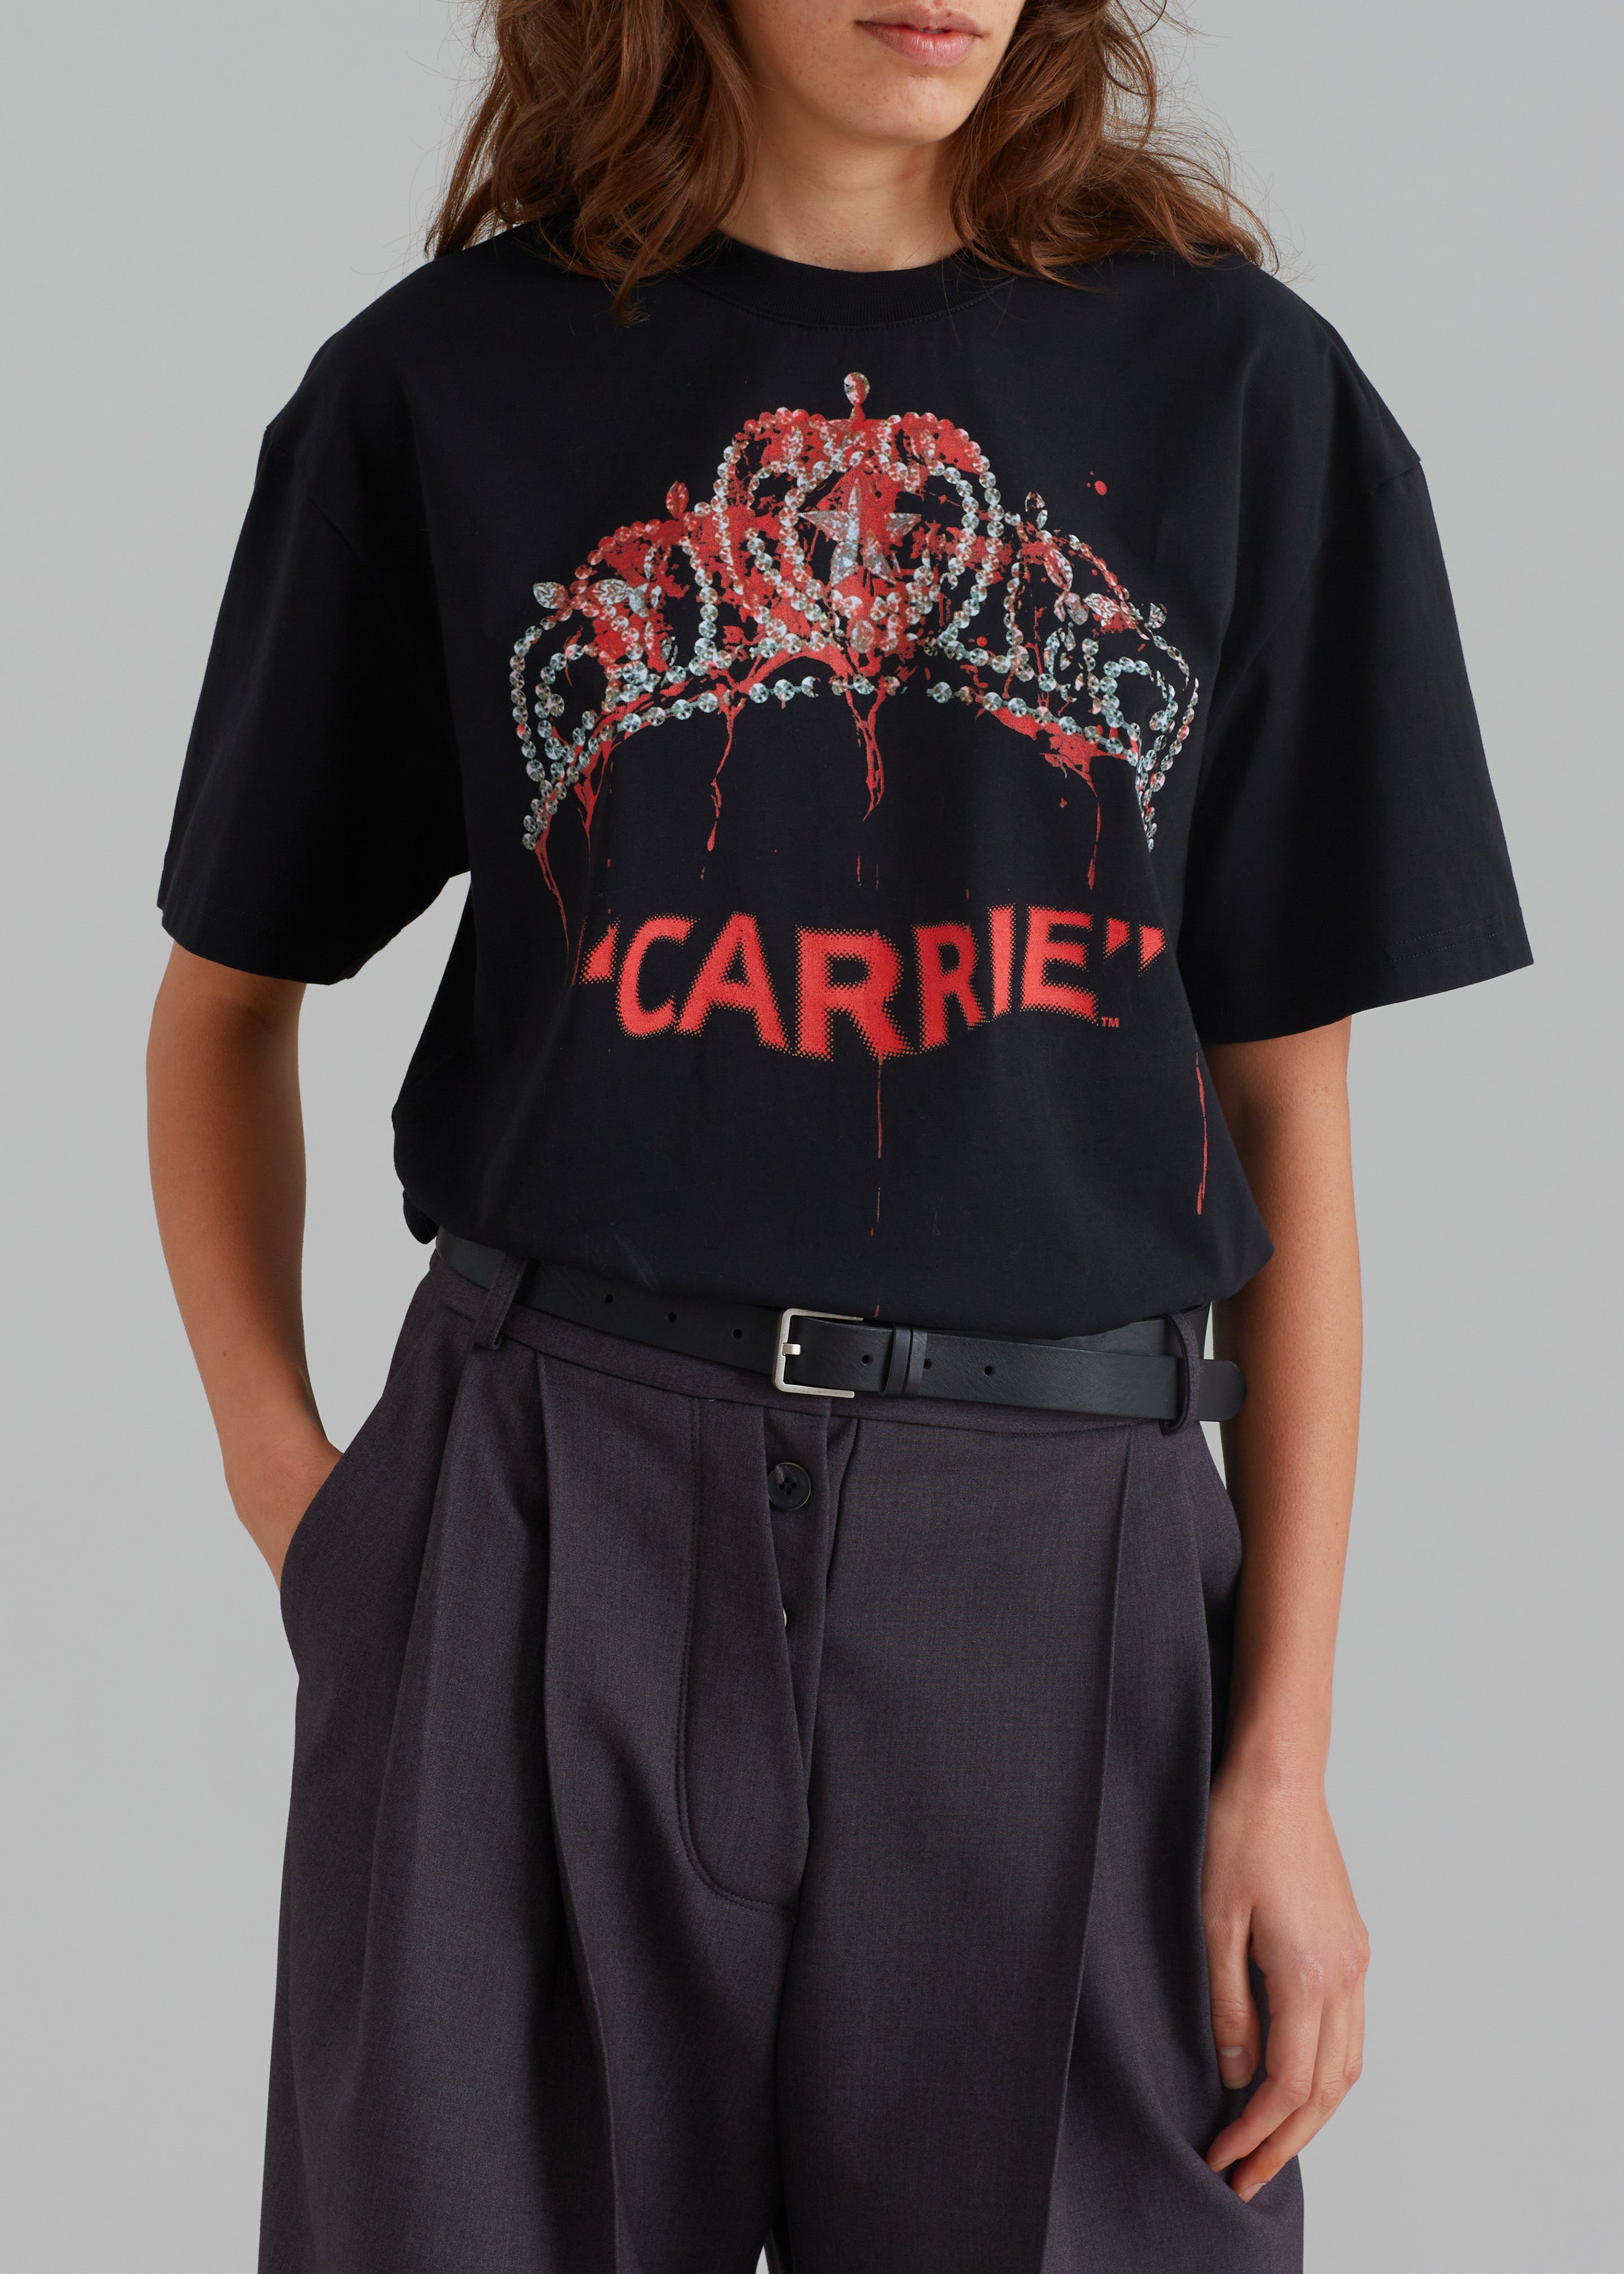 JW Anderson Carrie Tiara T-Shirt - Black - 5